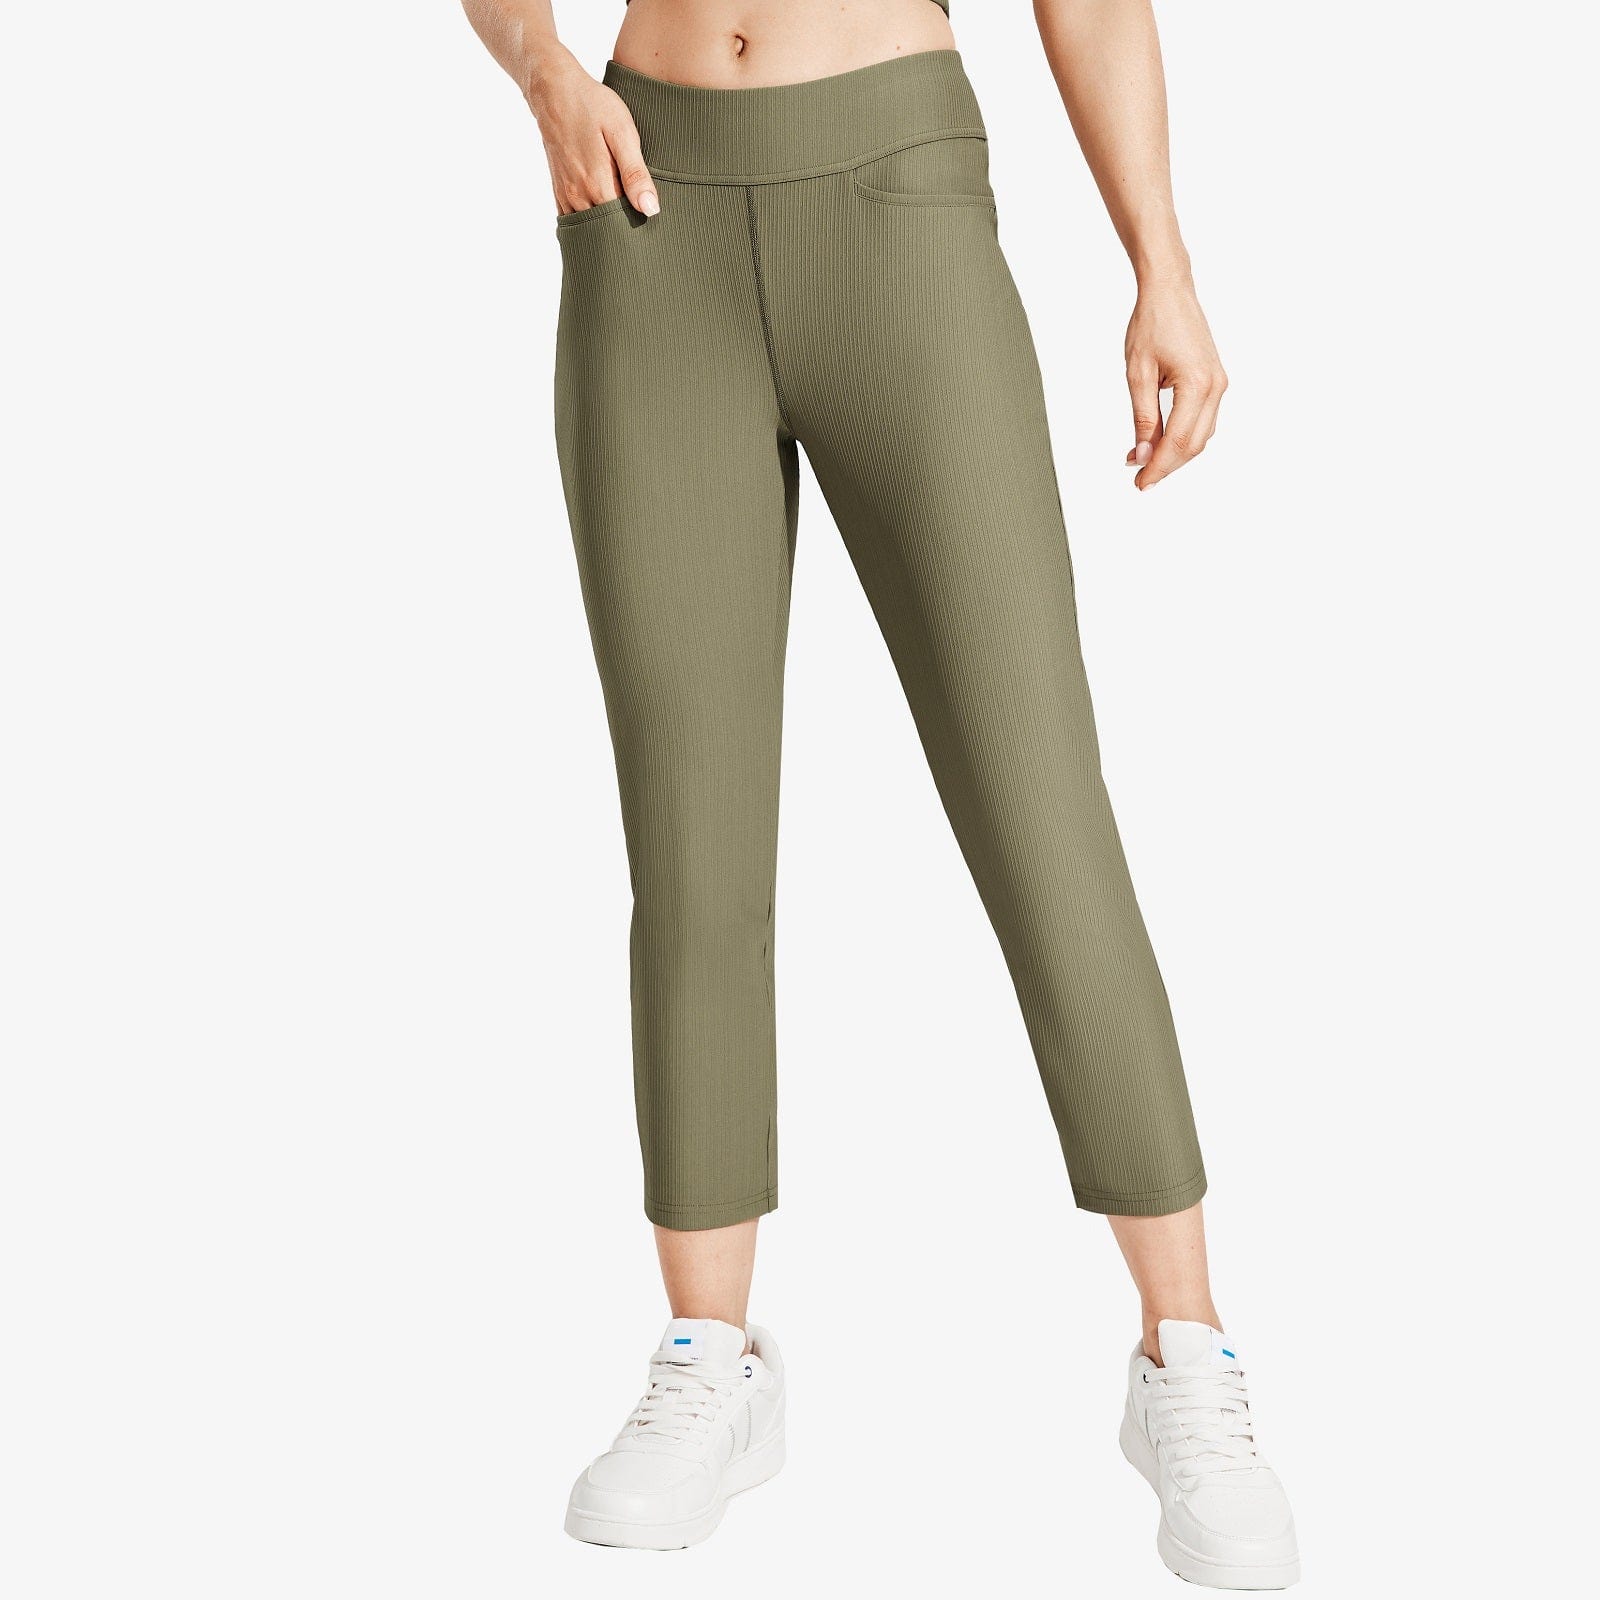 Women's High-Waisted Ribbed Capri Legging Yoga Pants - Army Green / XS